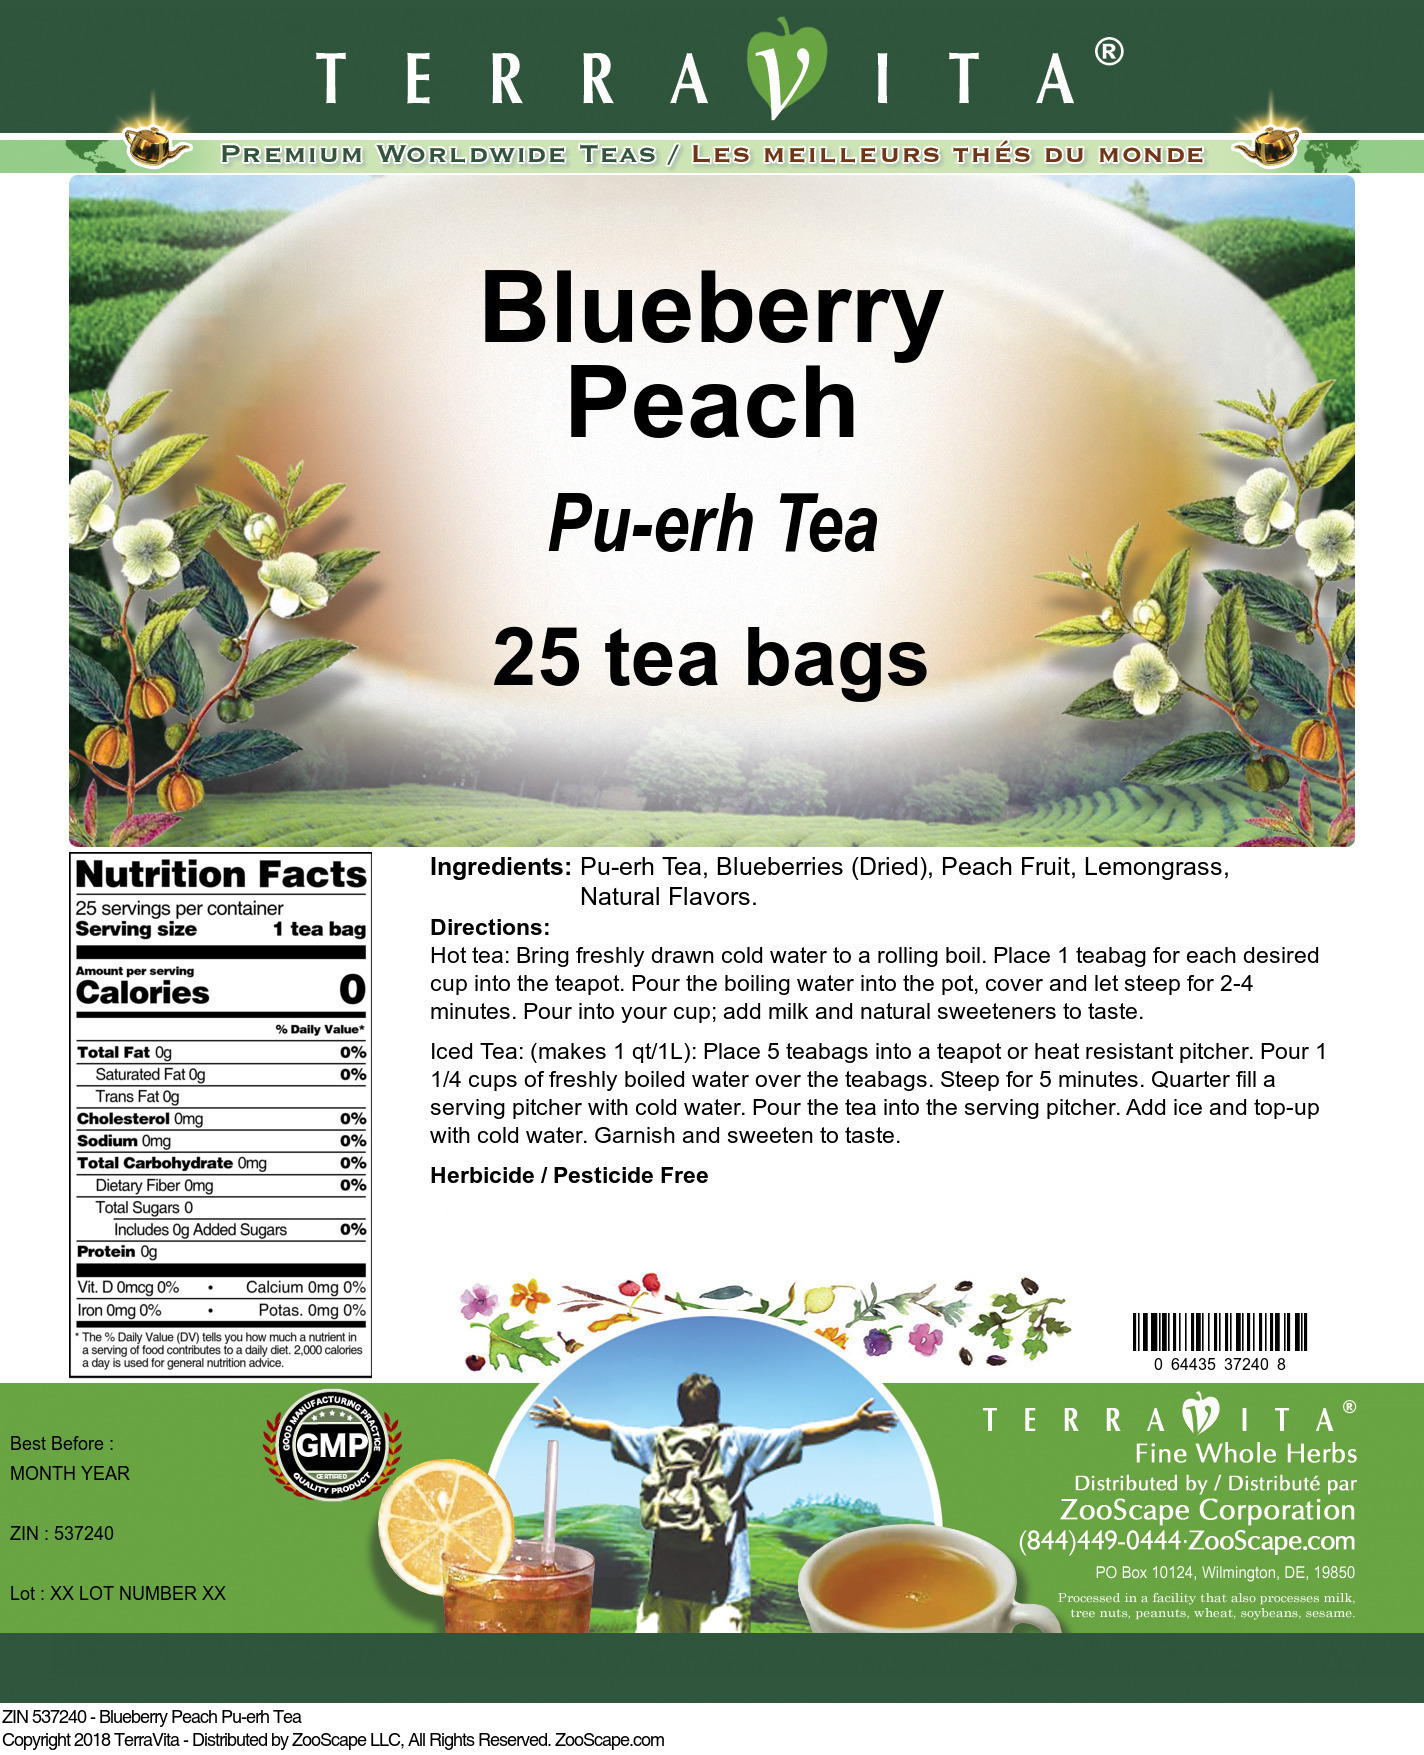 Blueberry Peach Pu-erh Tea - Label